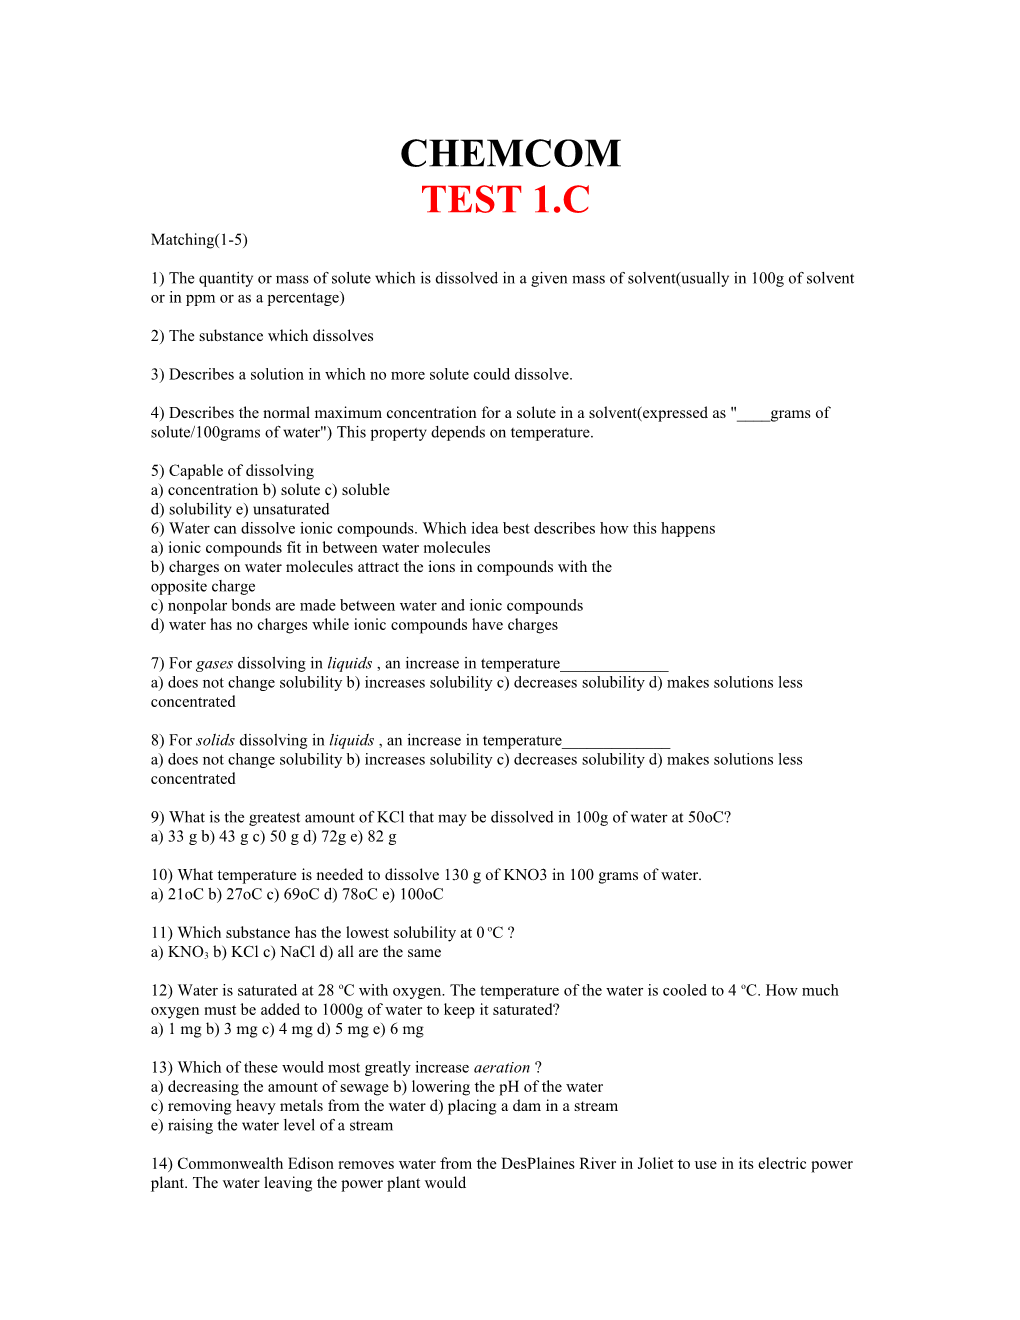 Chemcom Test 1.C